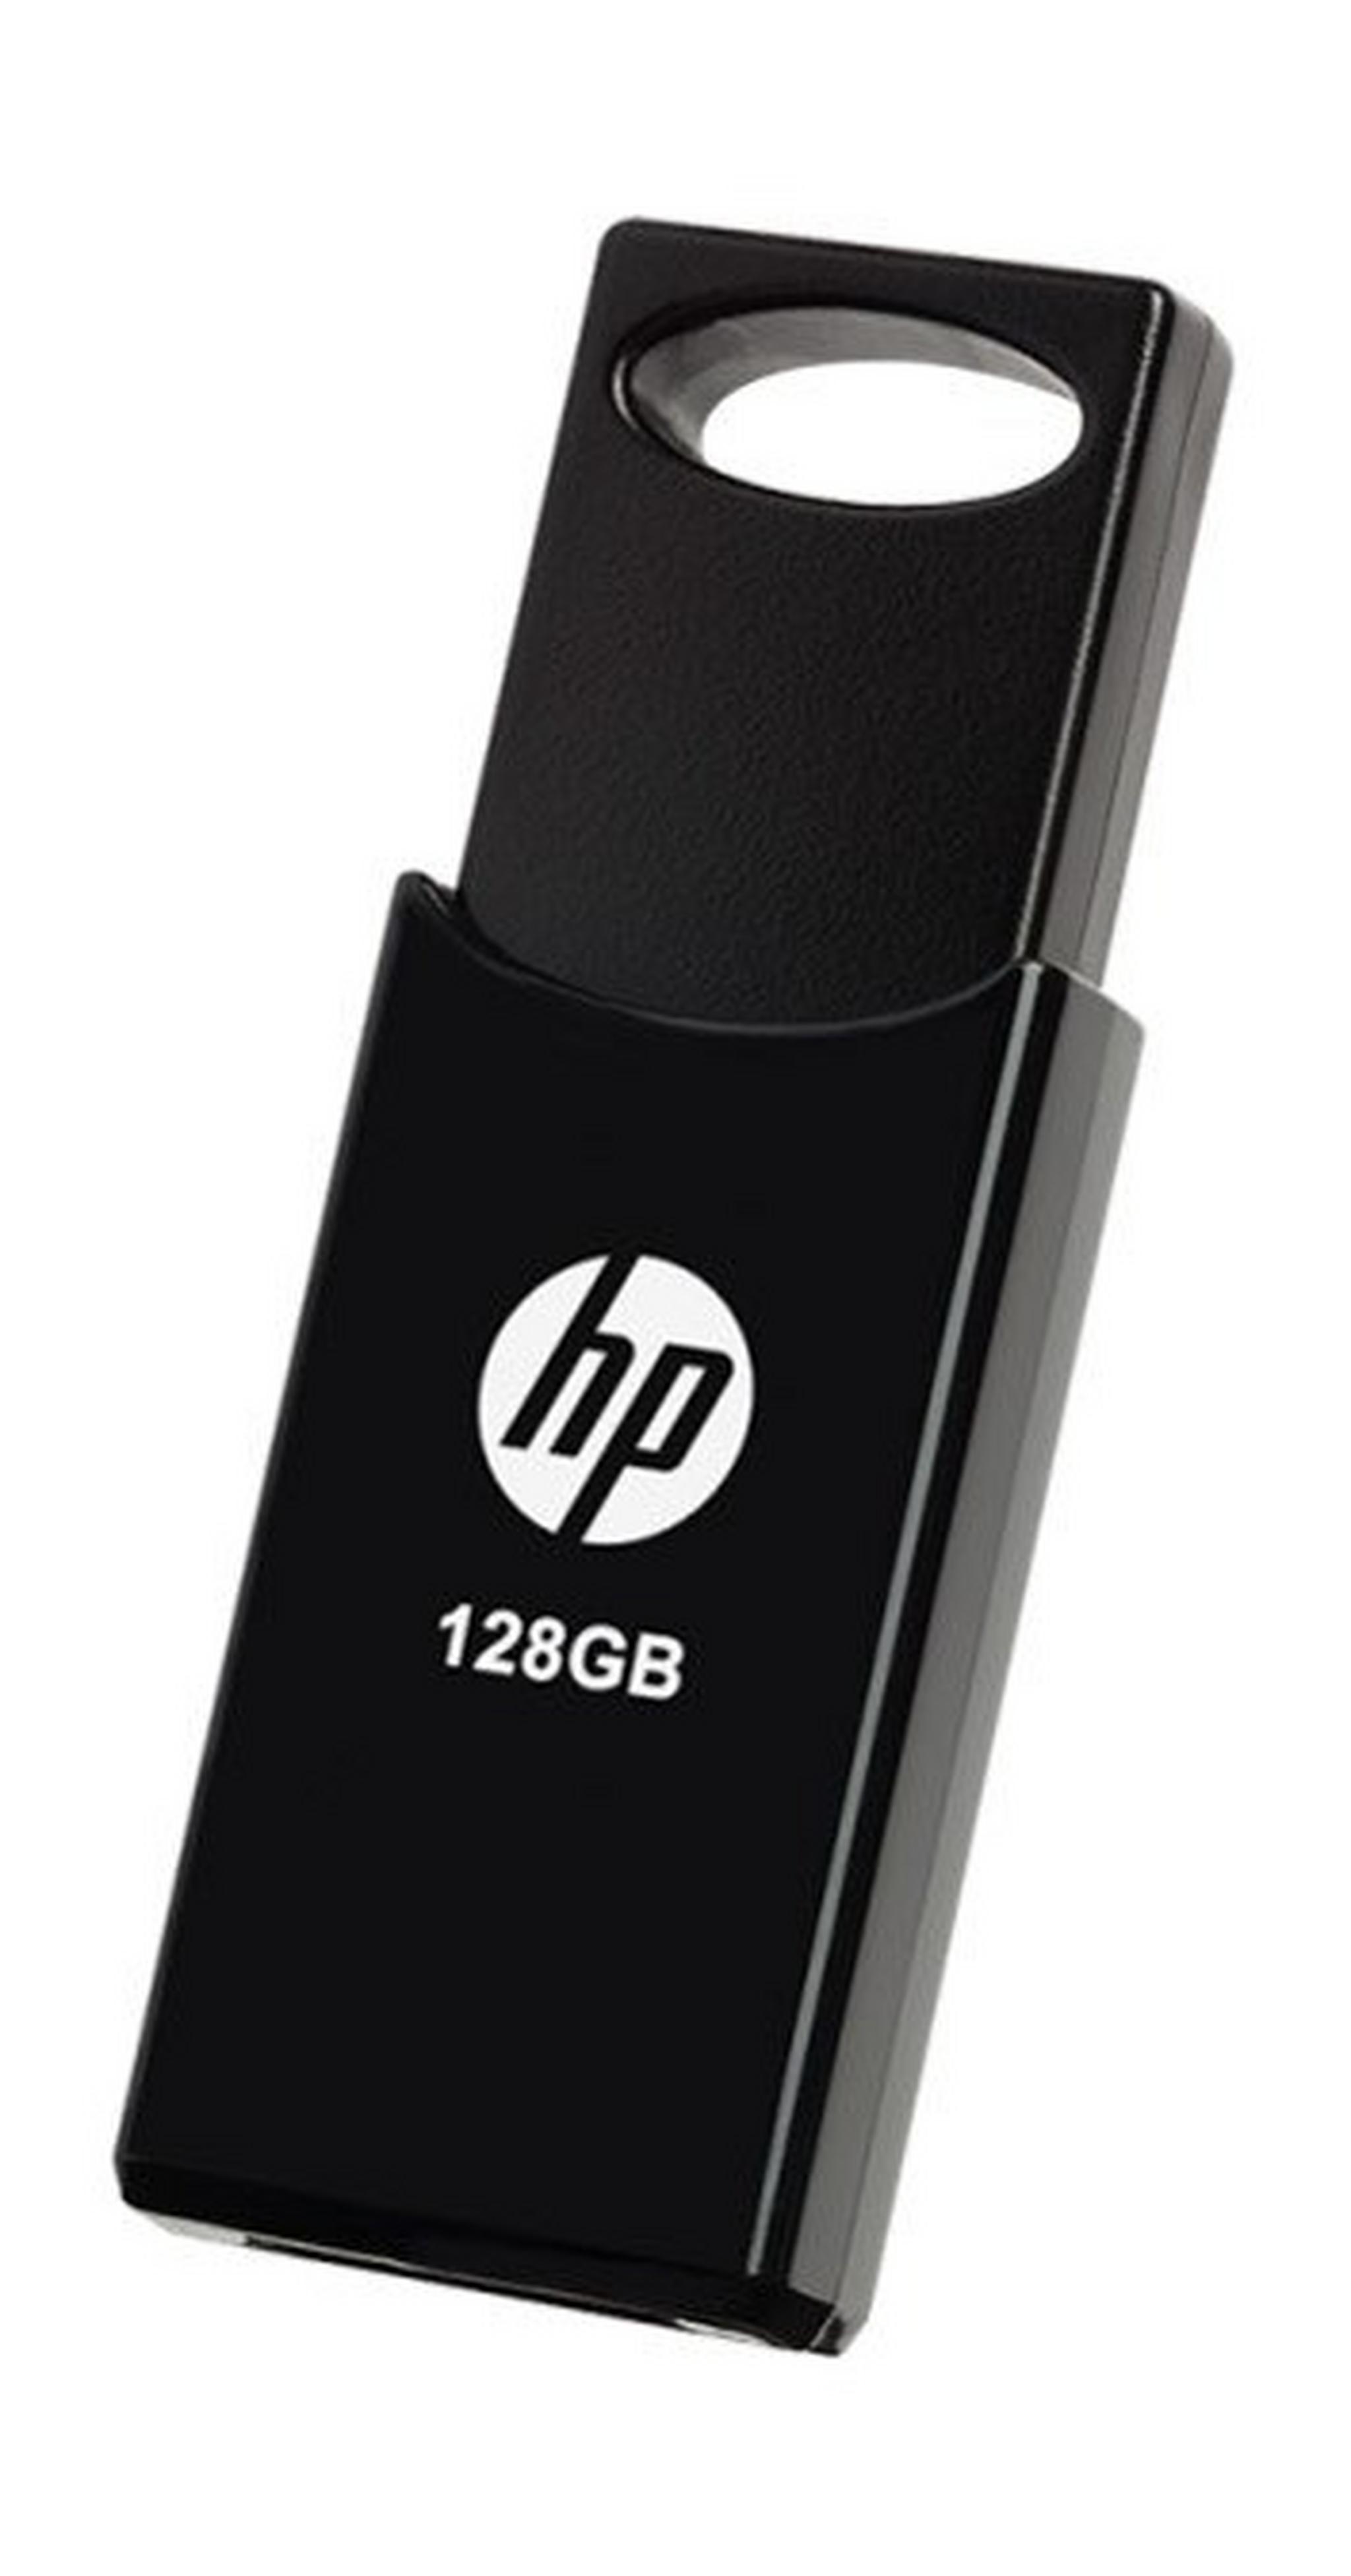 HP 2.0 128GB Flash Drive - HPFD212W128